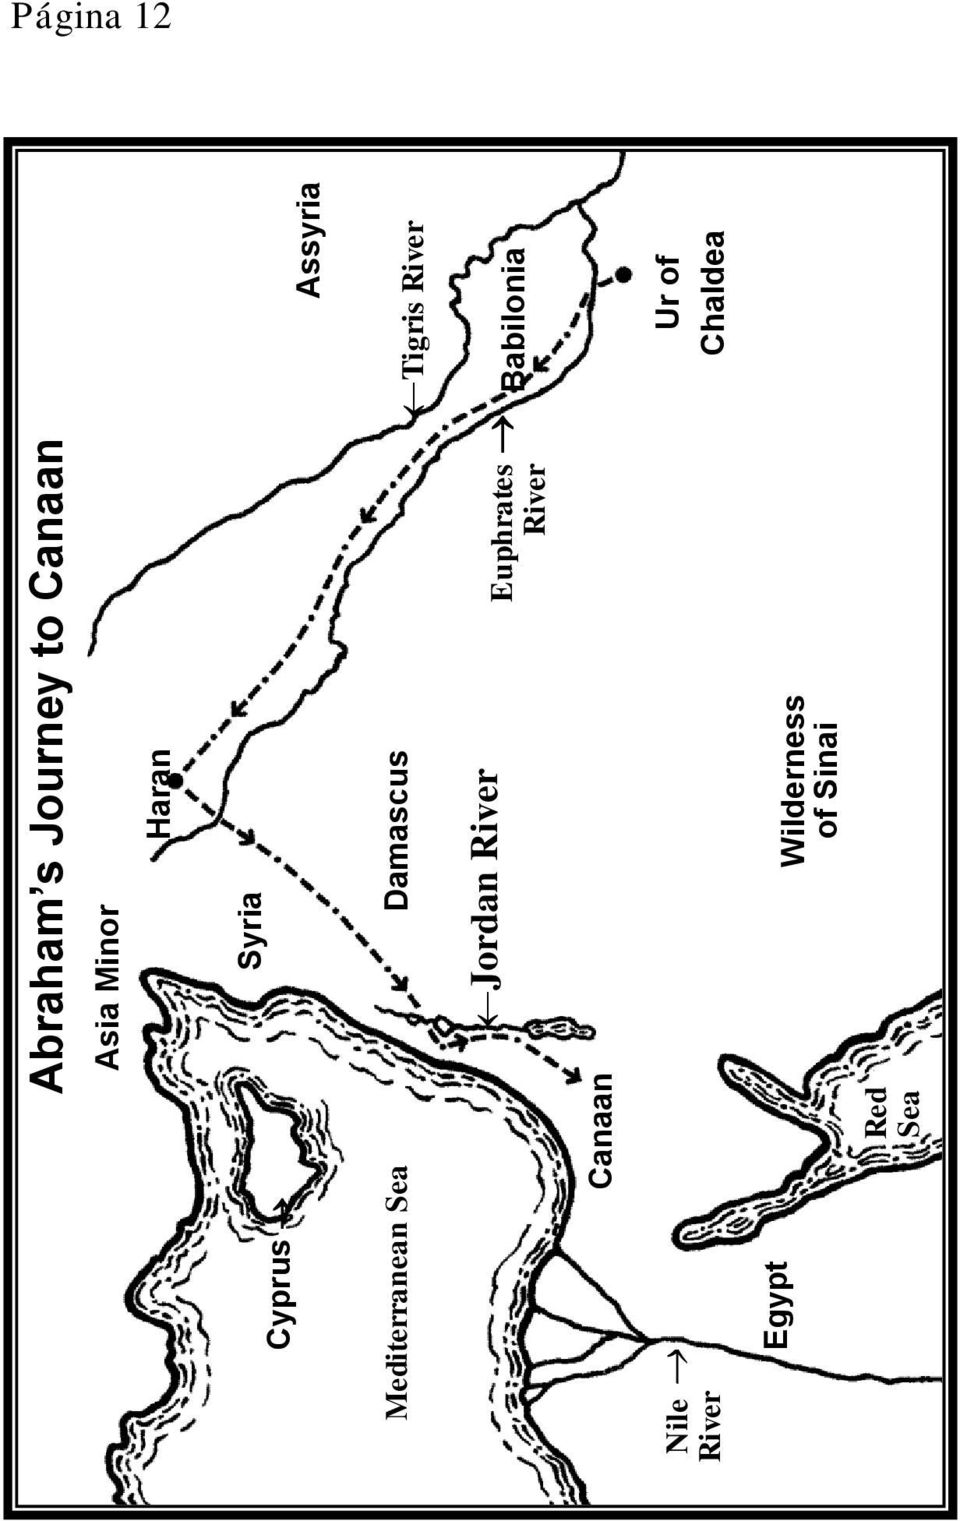 Assyria Página 12 Nile Euphrates River Cyprus